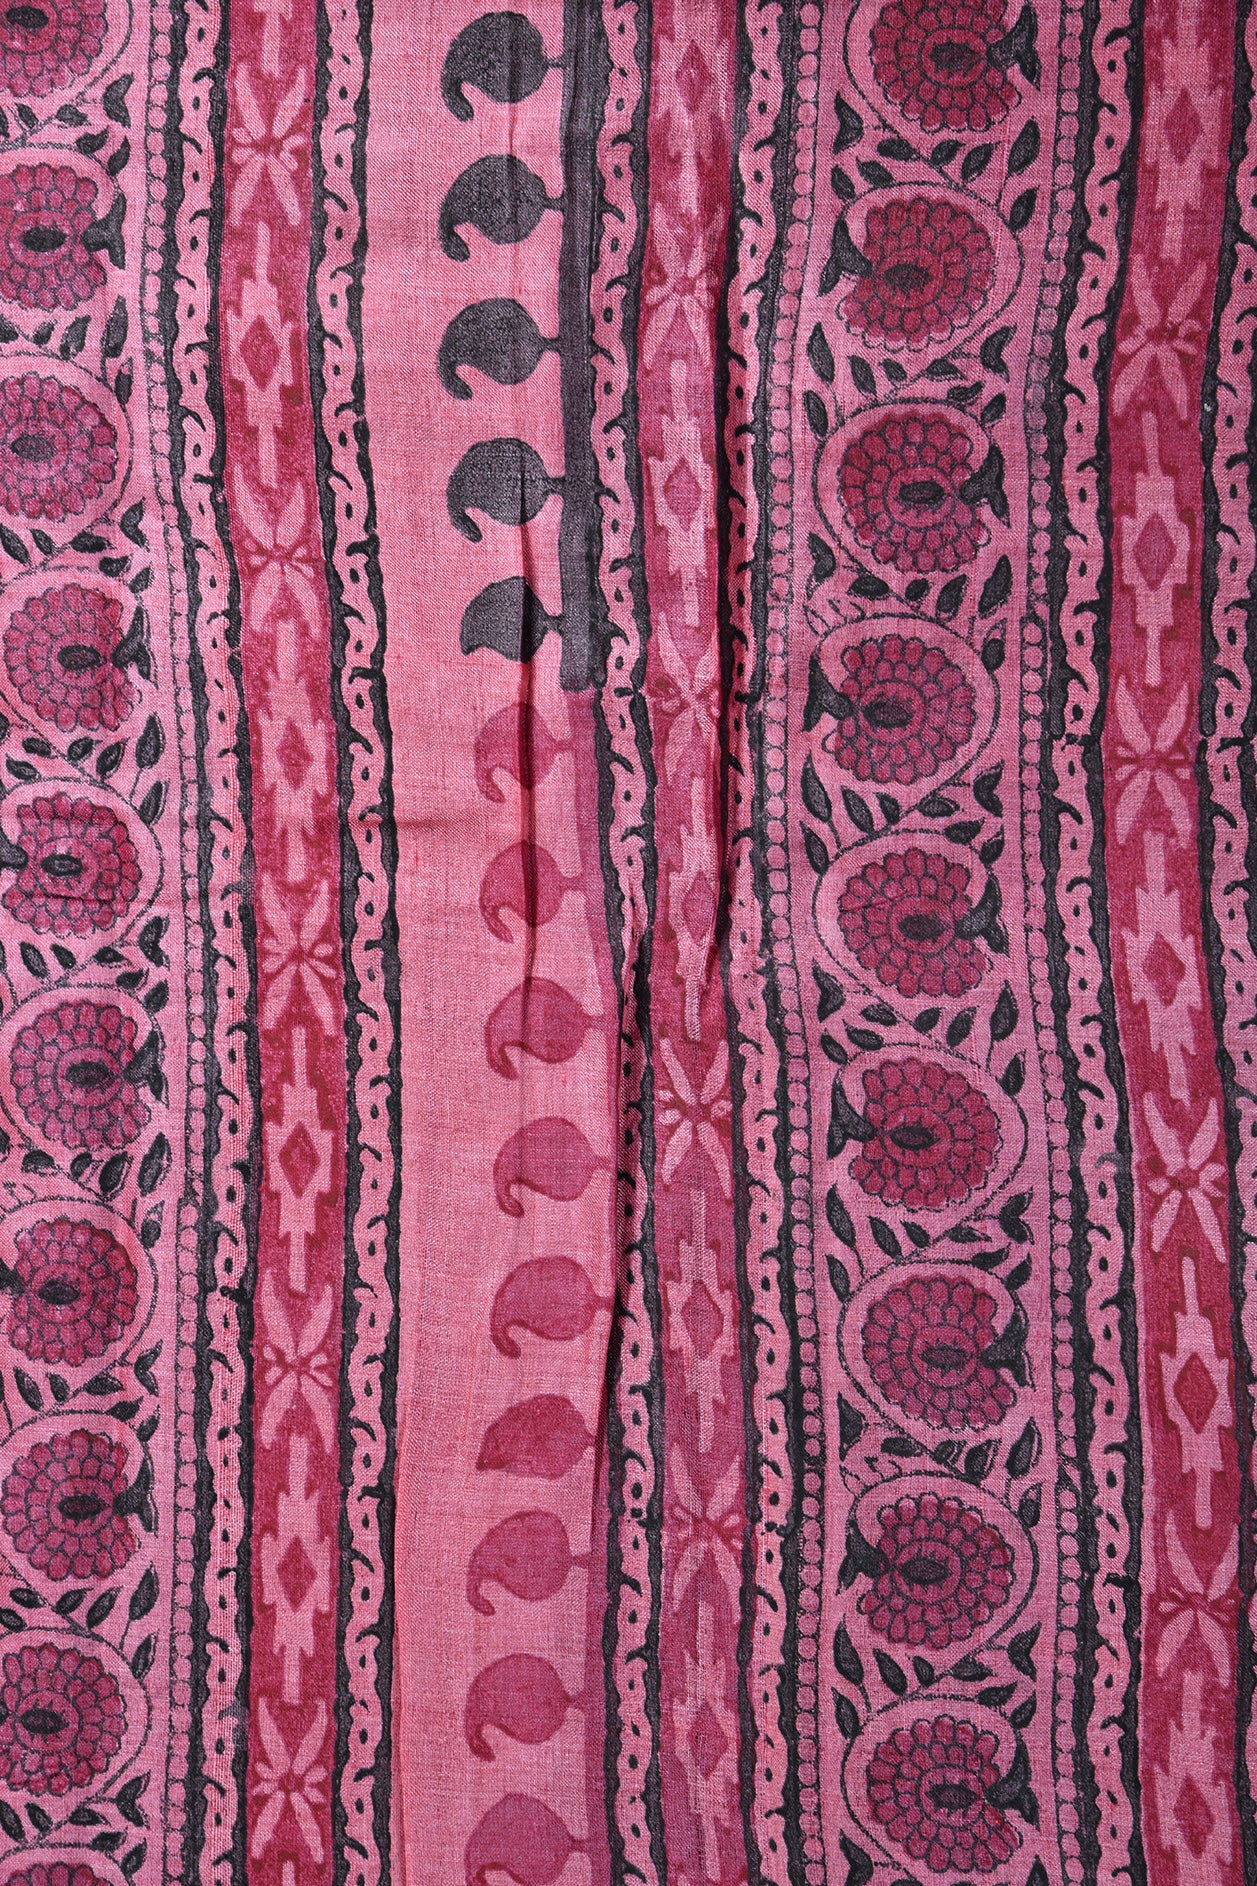 Floral Border Design Coral Pink Tussar Saree